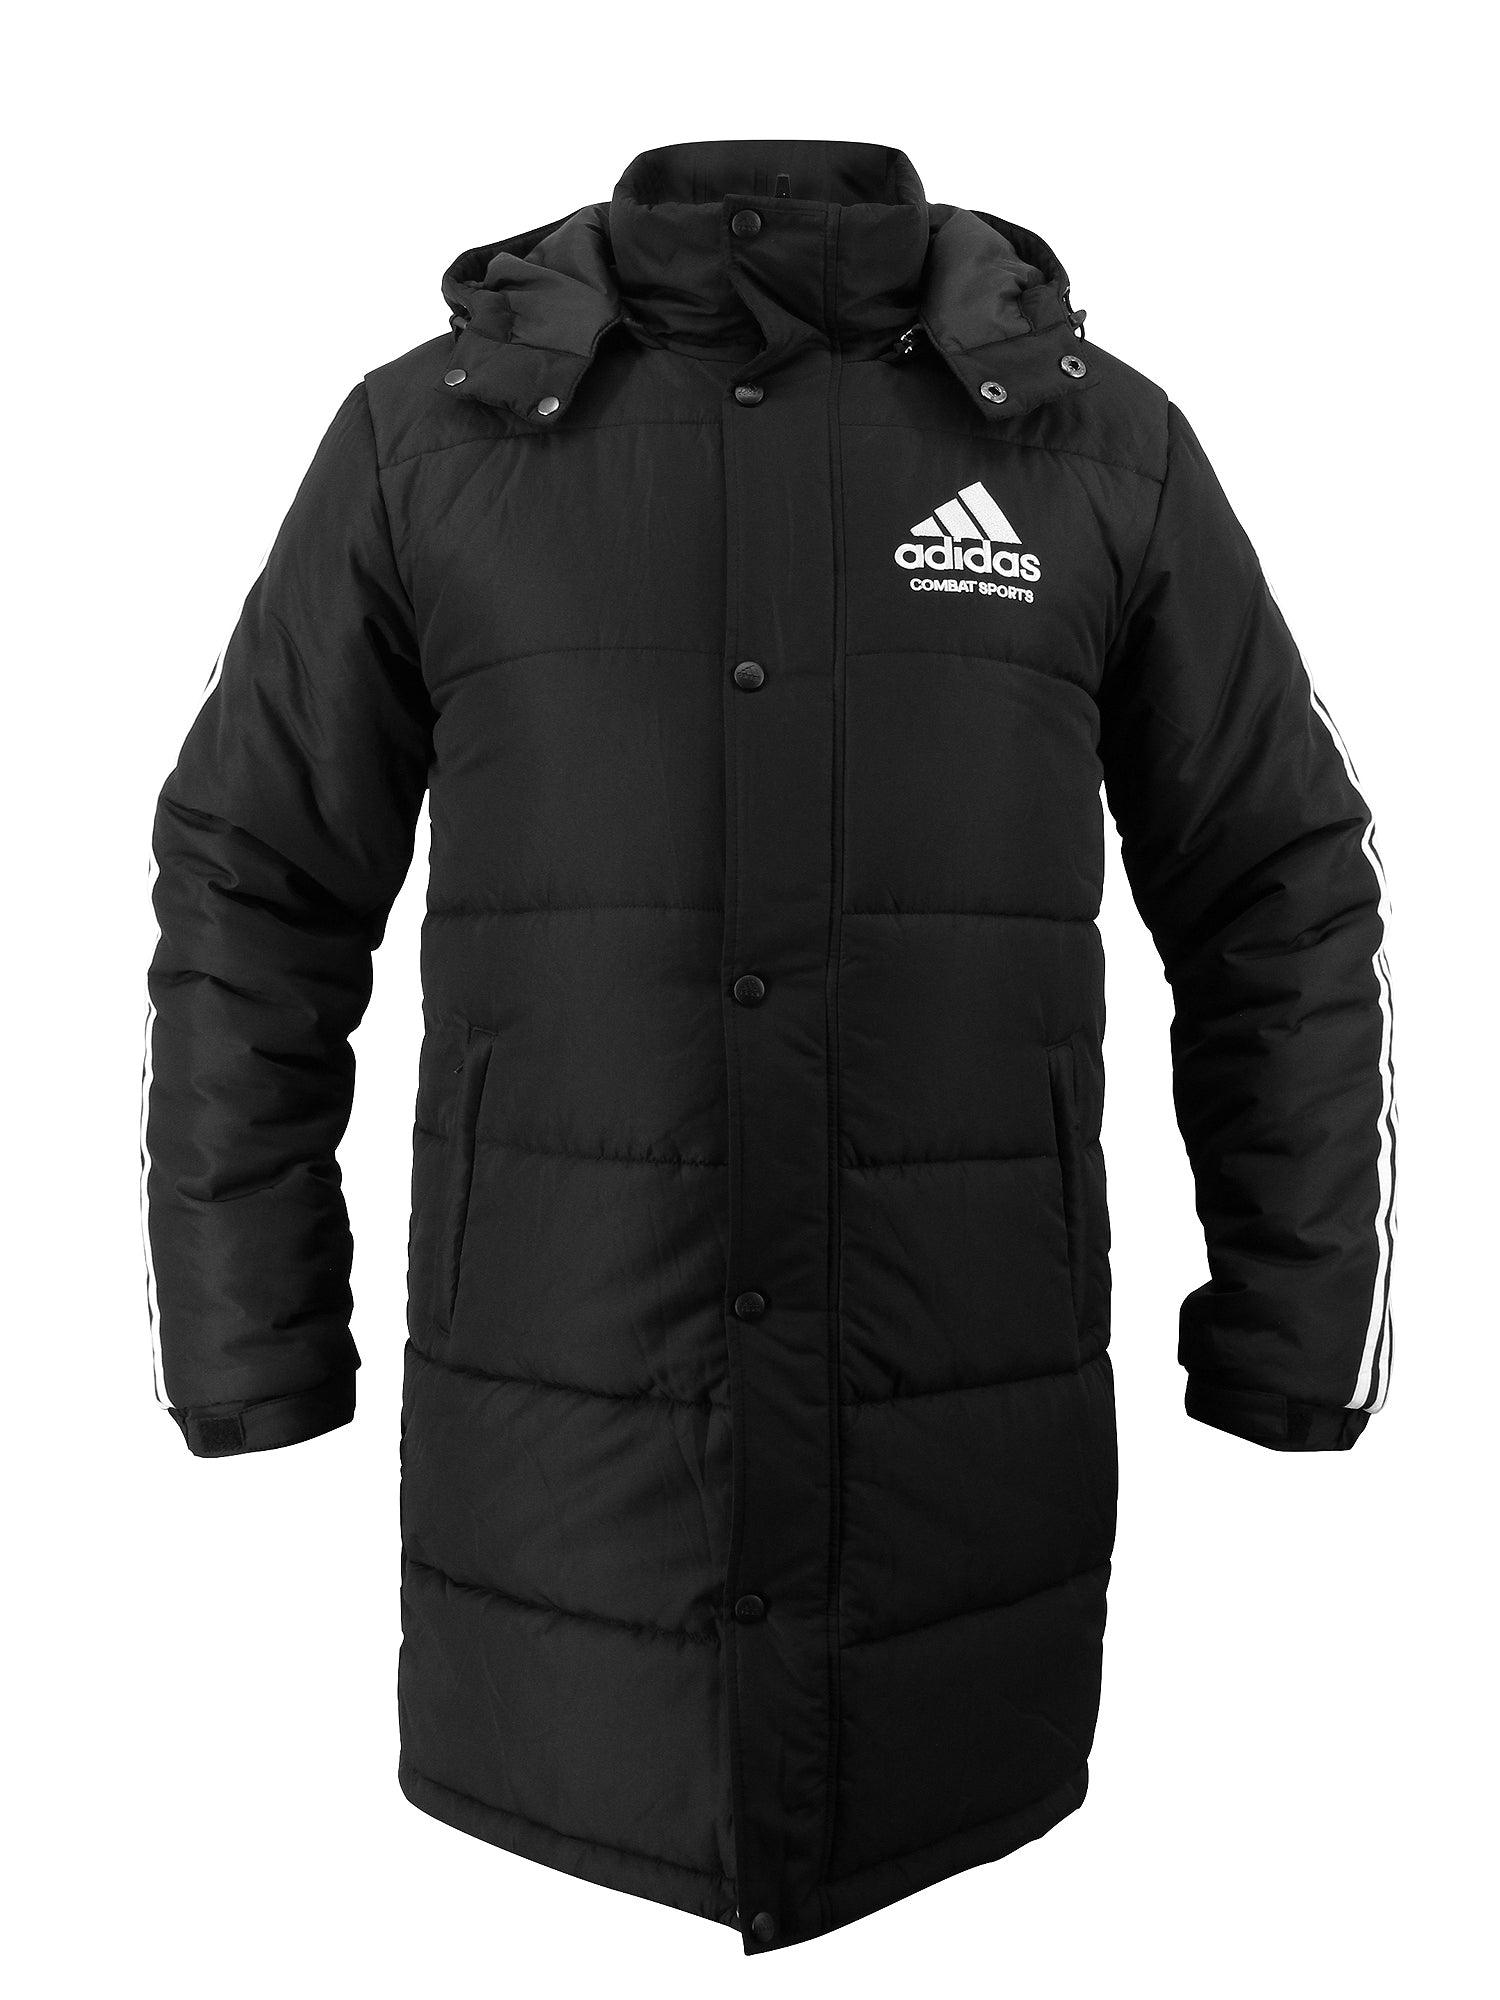 adidas Combat Sports Winter Long Padded Parka Jacket – All American ...